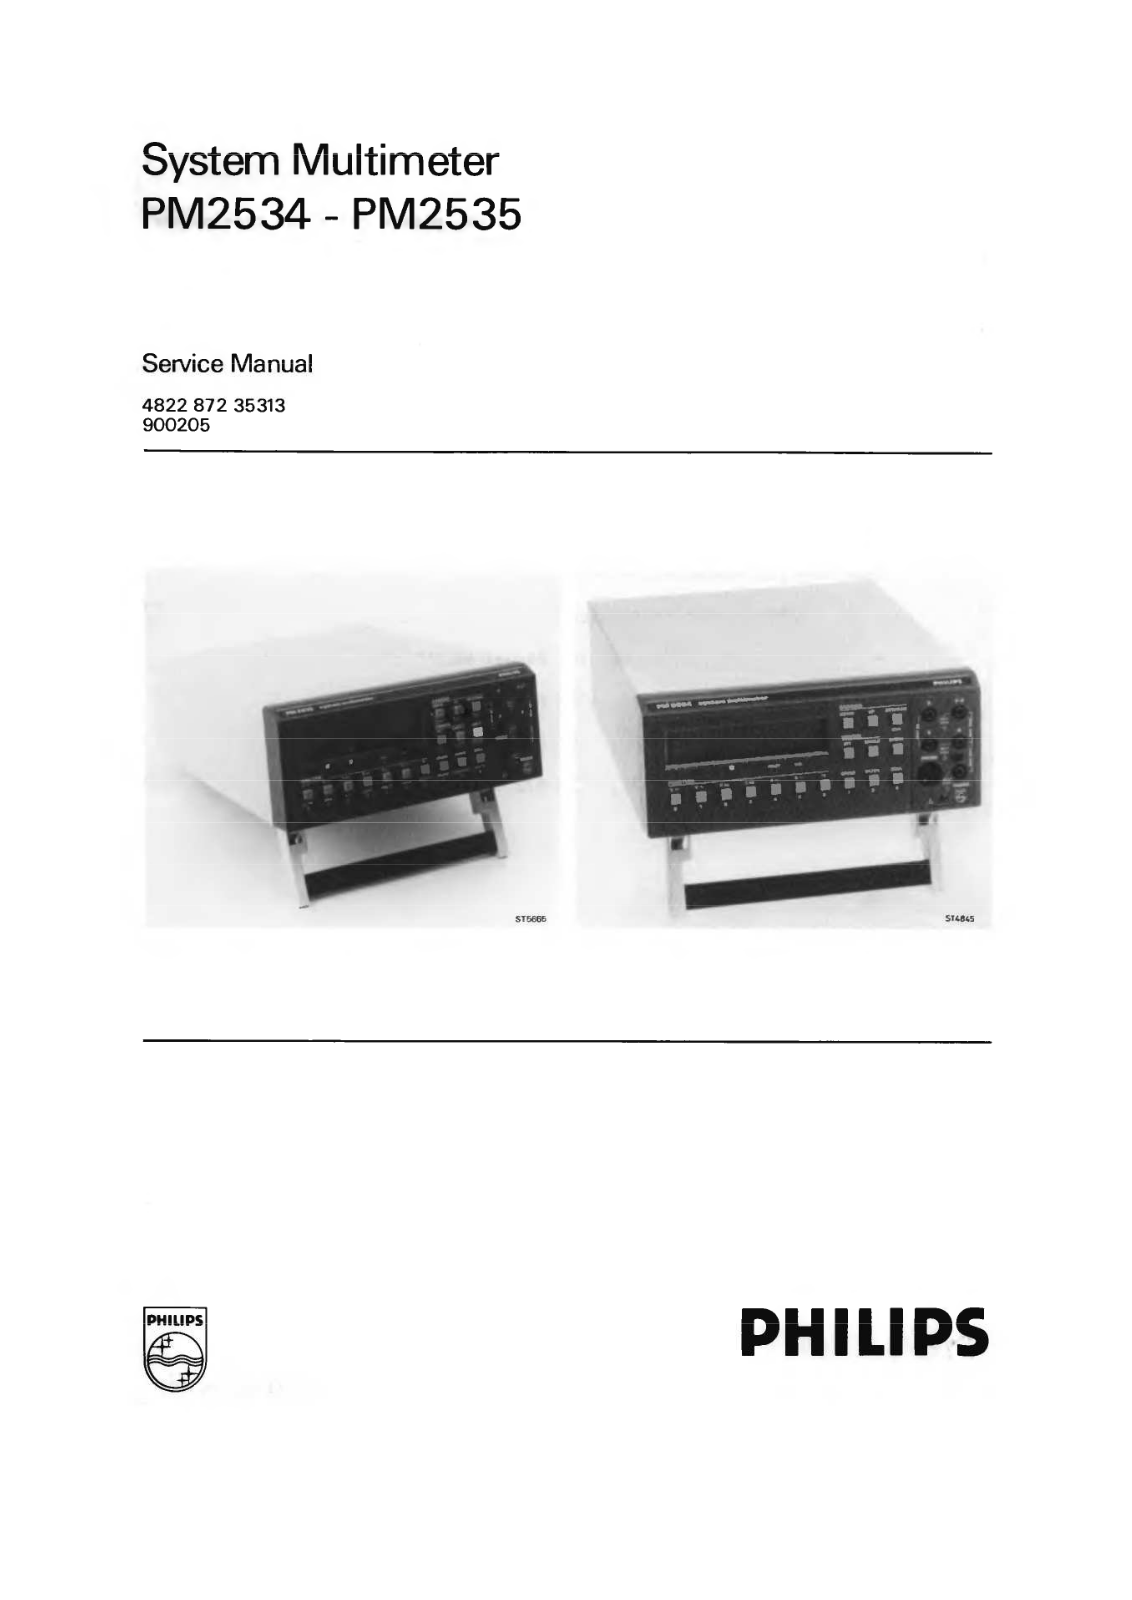 Philips PM2535, PM2534 Service Manual